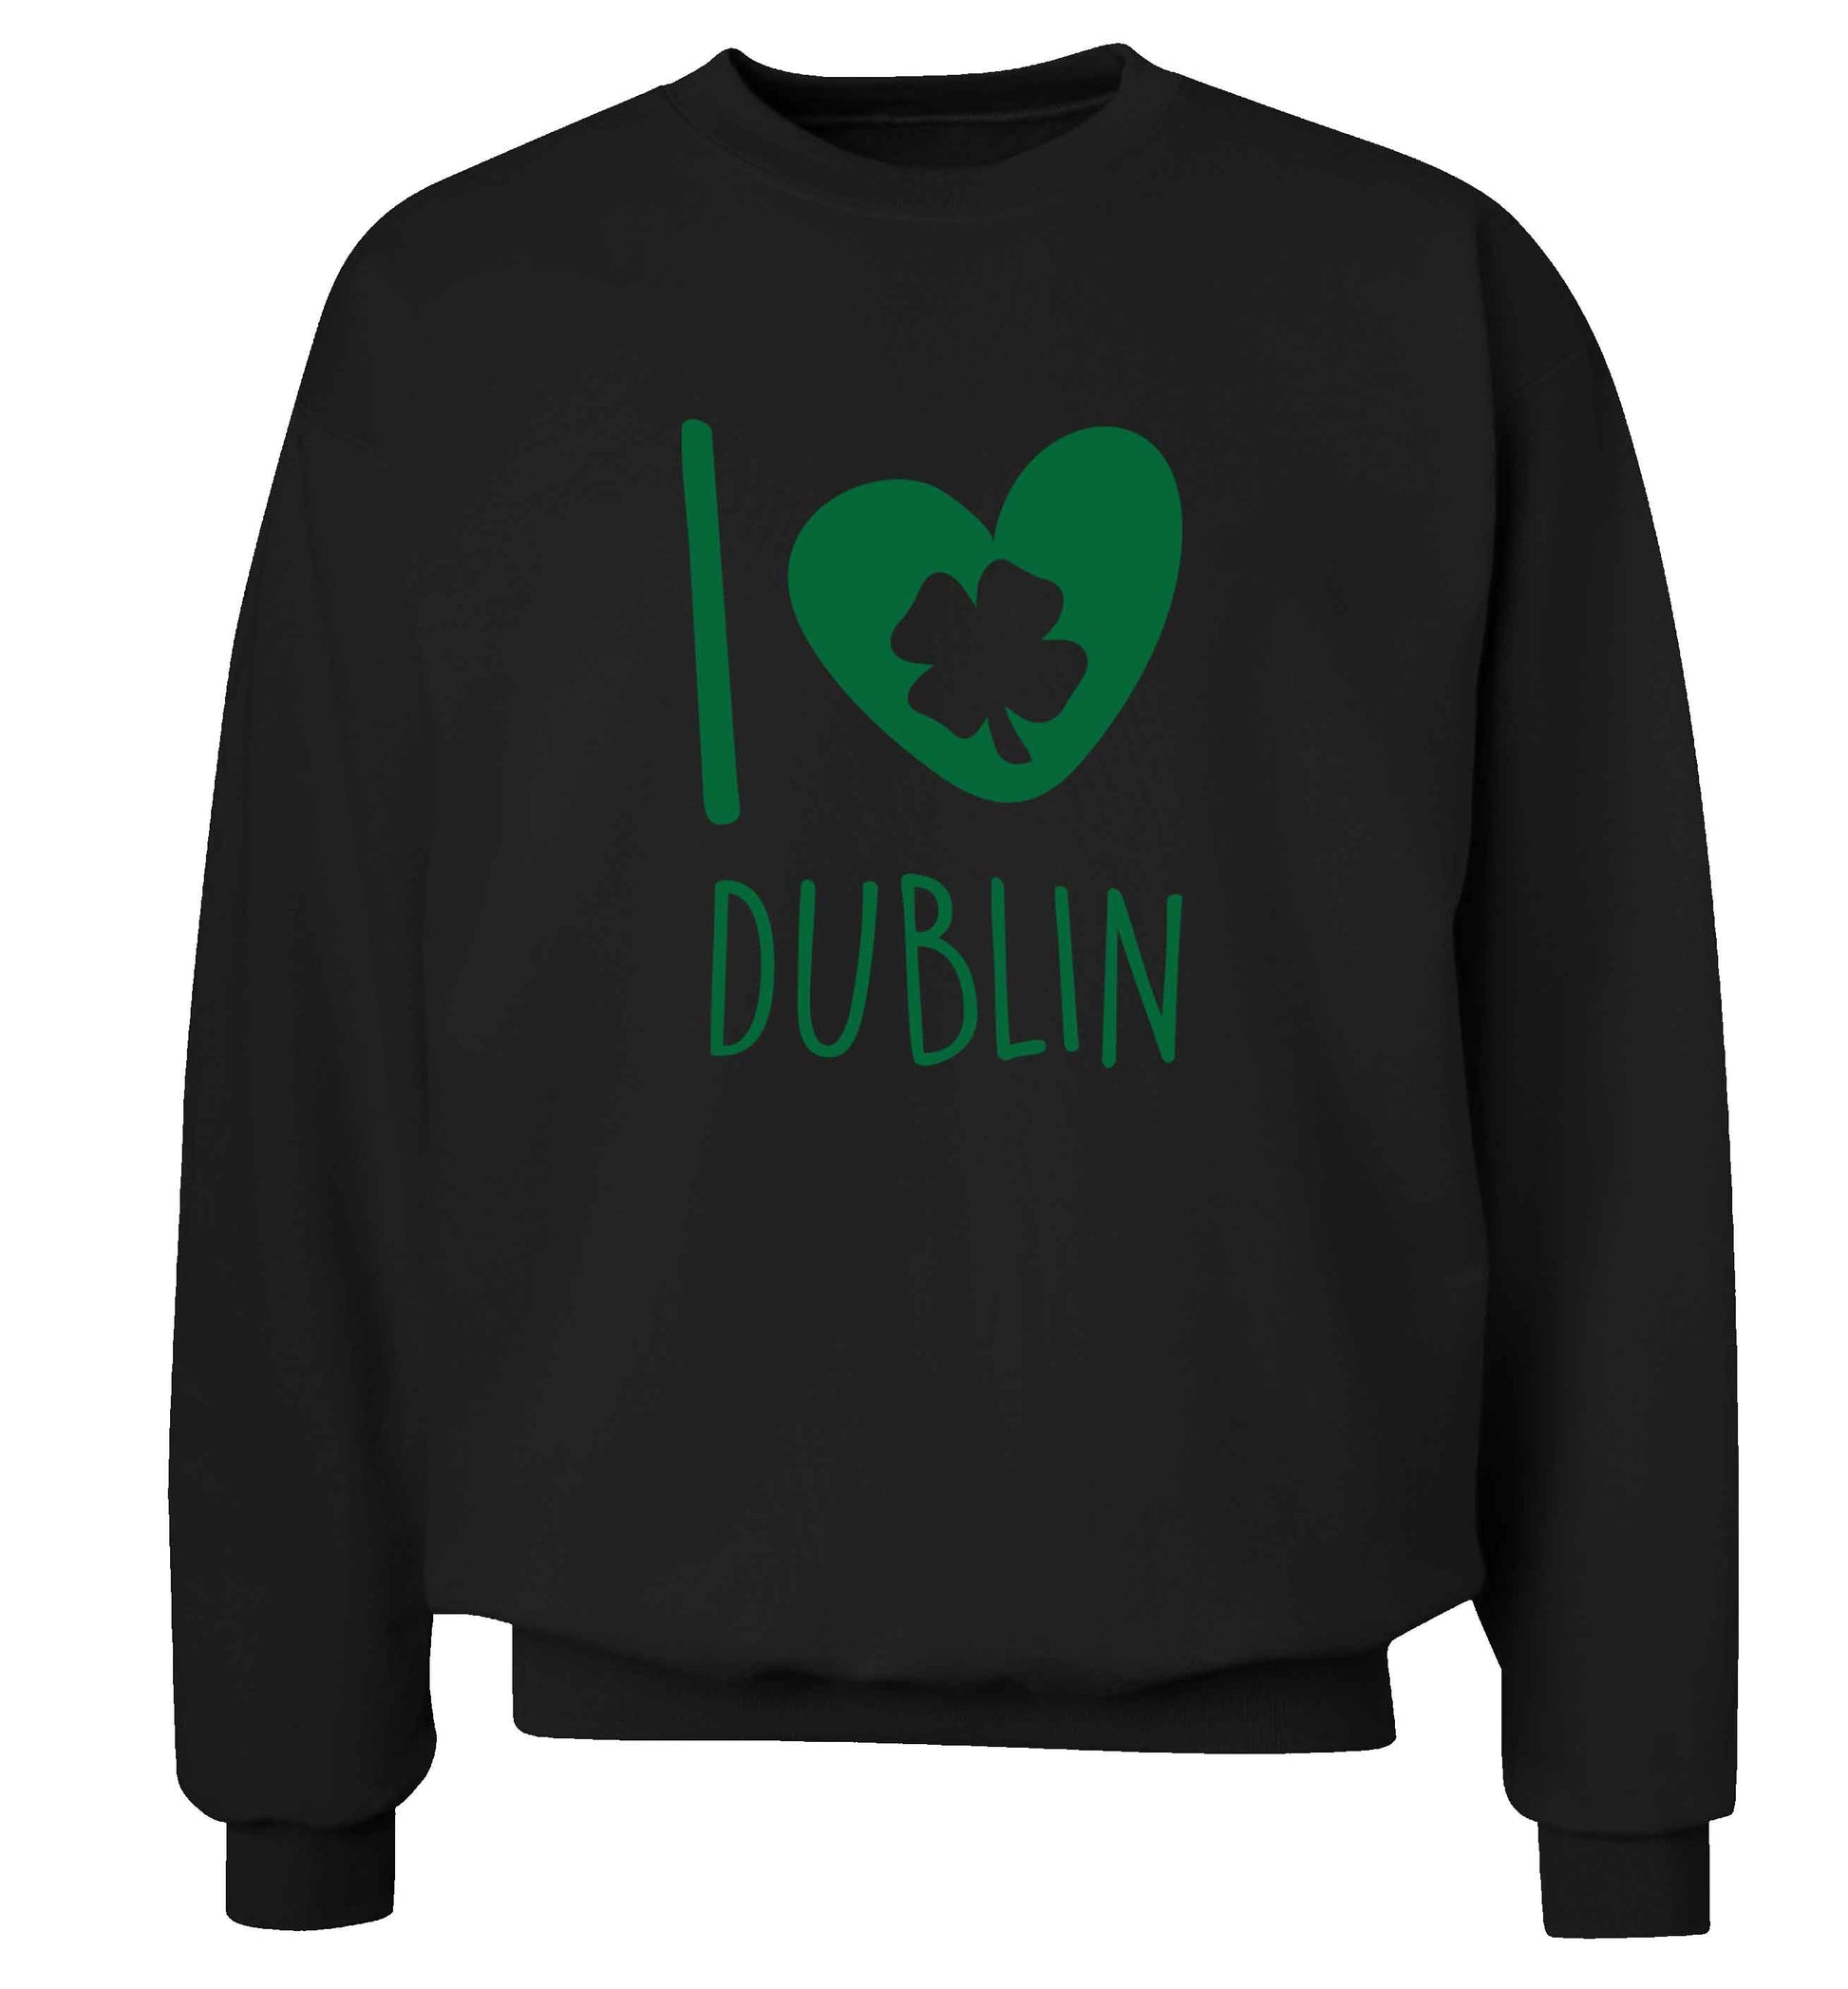 I love Dublin adult's unisex black sweater 2XL